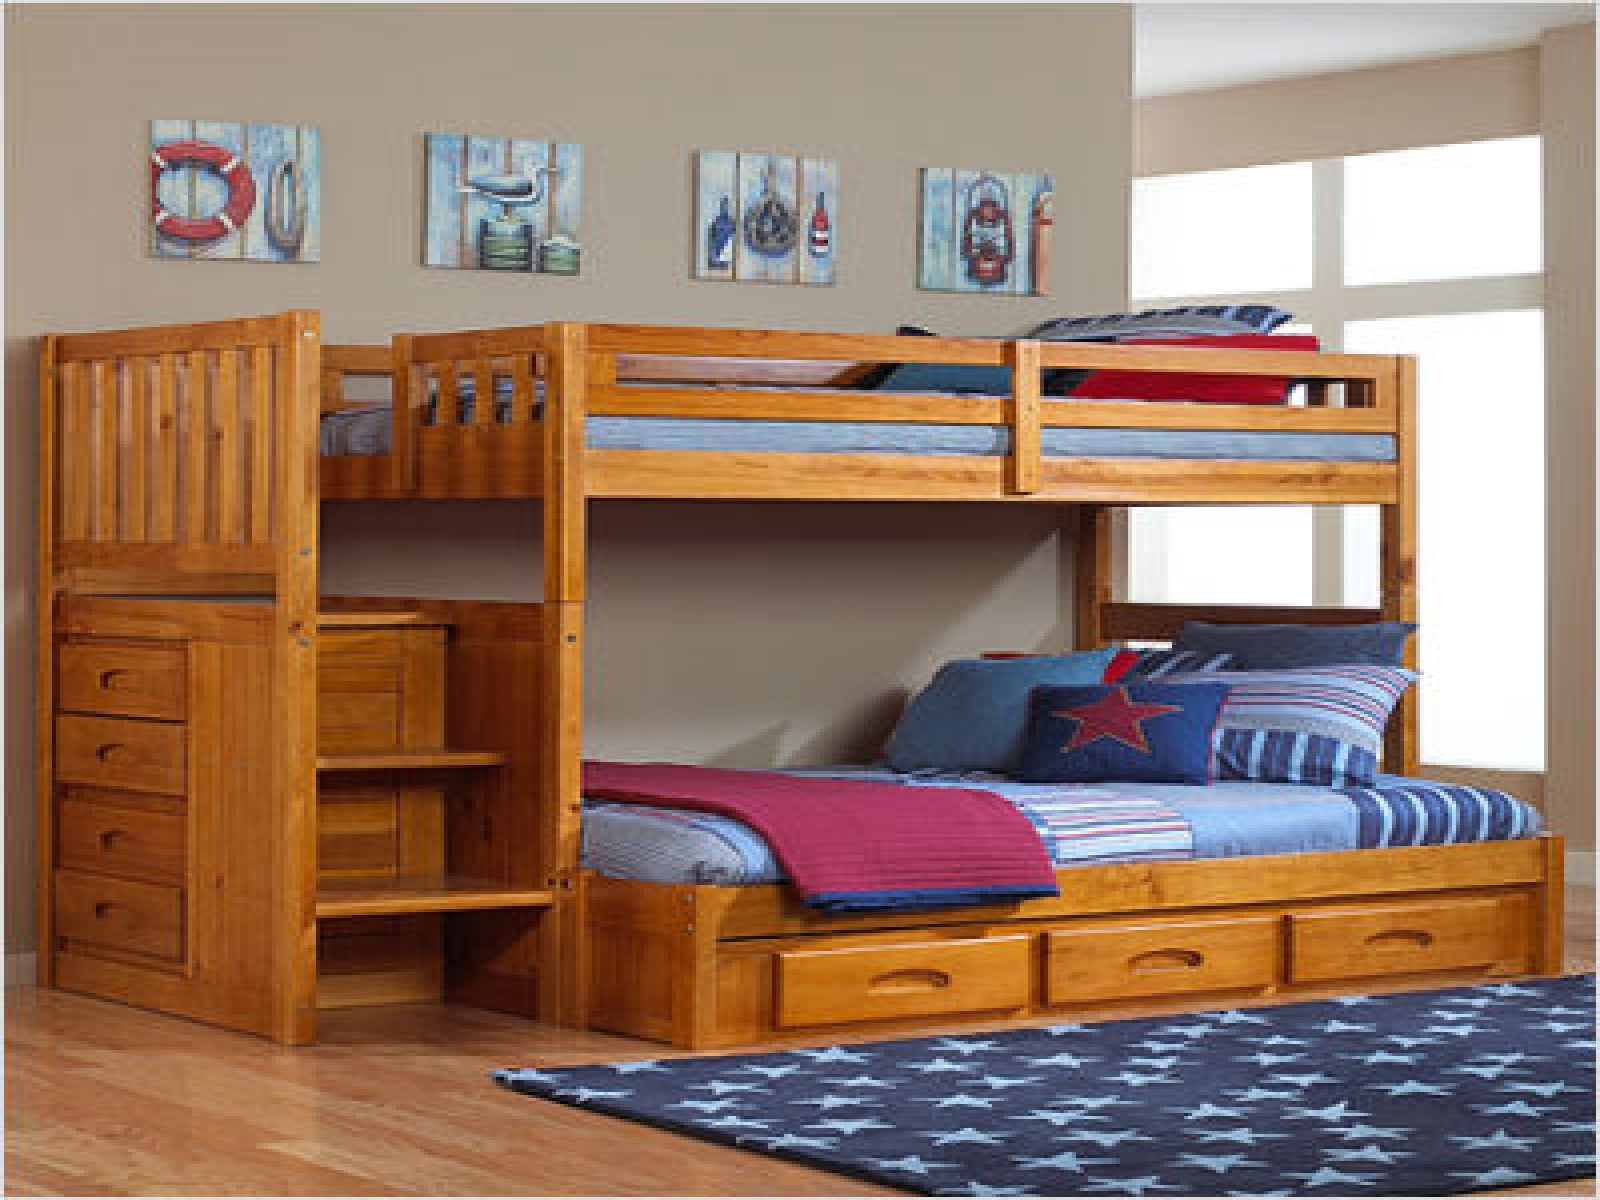 kids bedroom furniture in minneapolis